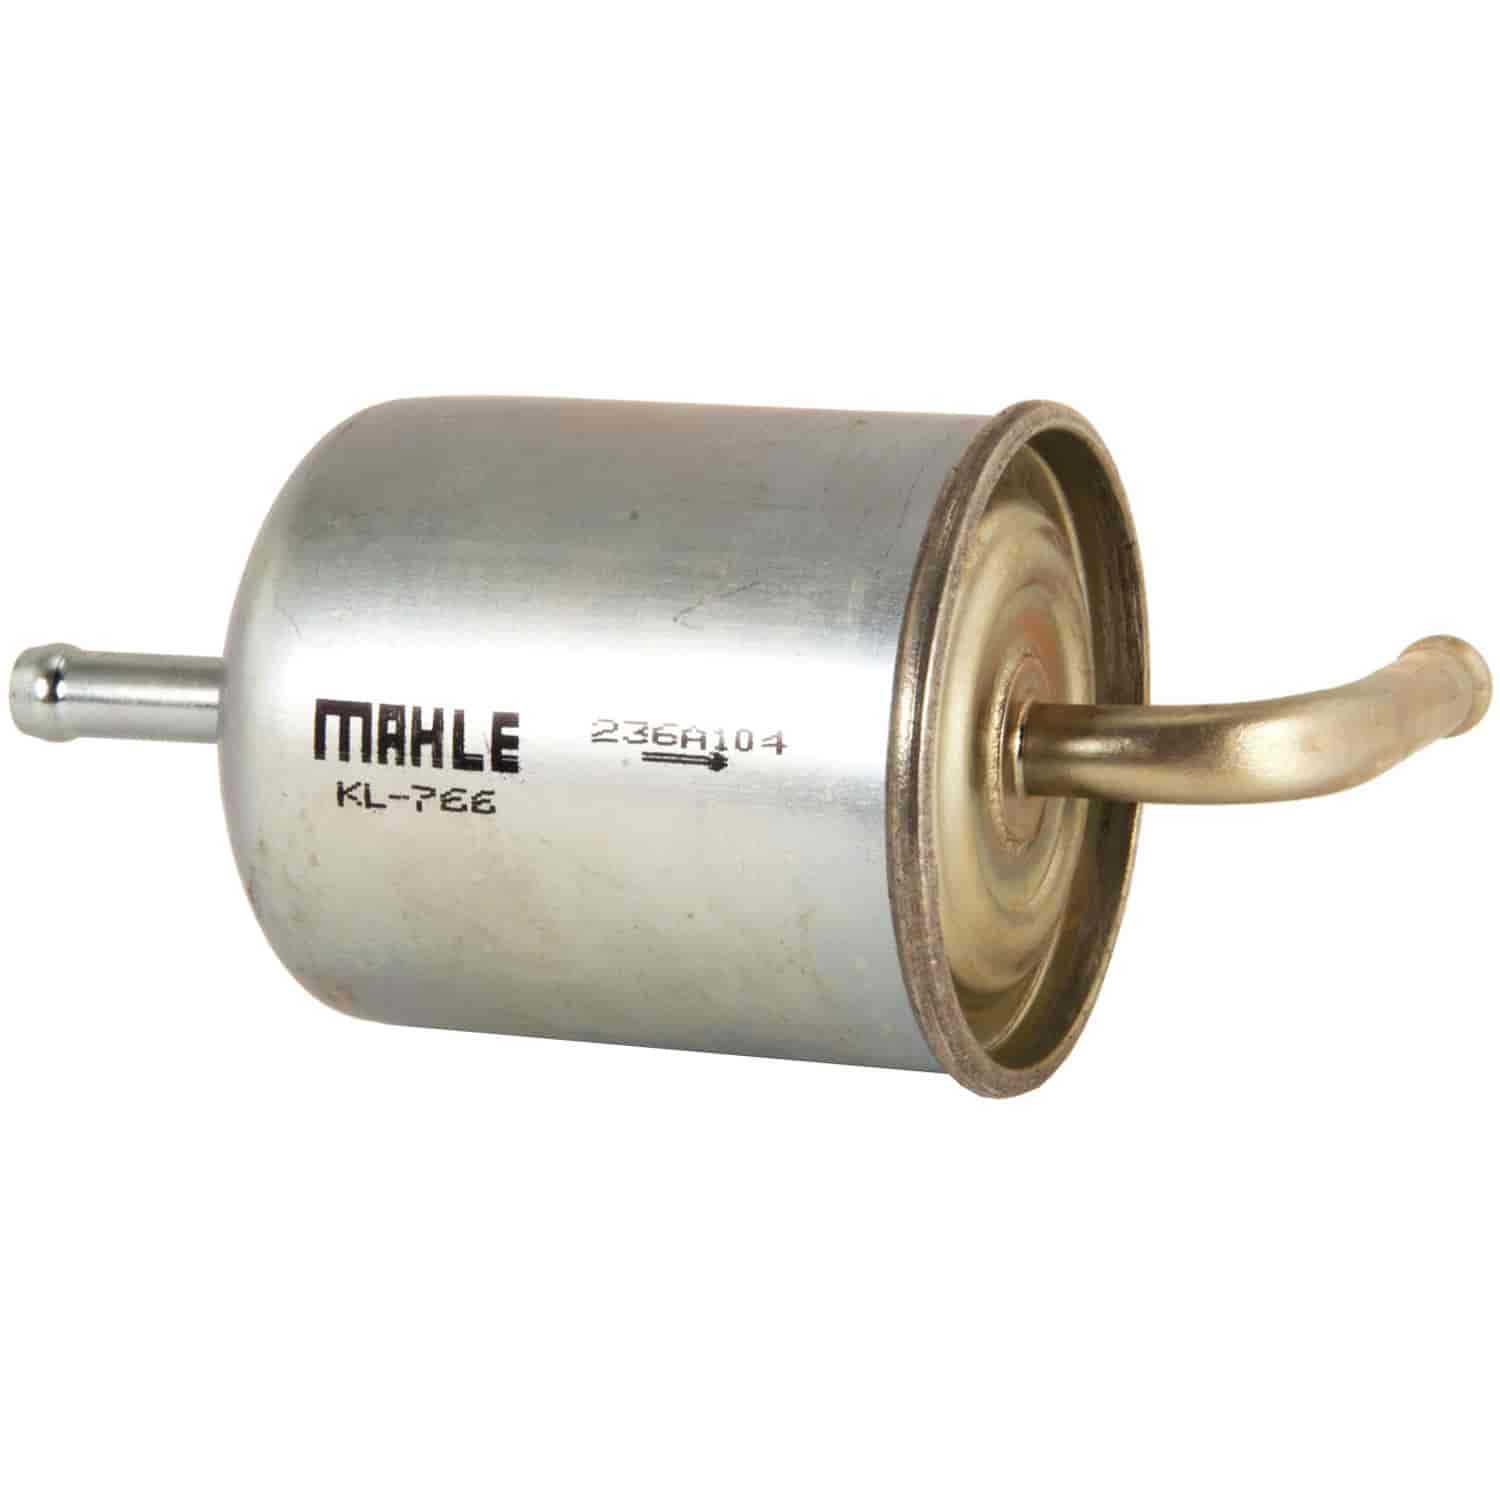 Mahle Fuel Filter for Nissan Tsuru 95-00 1.6L